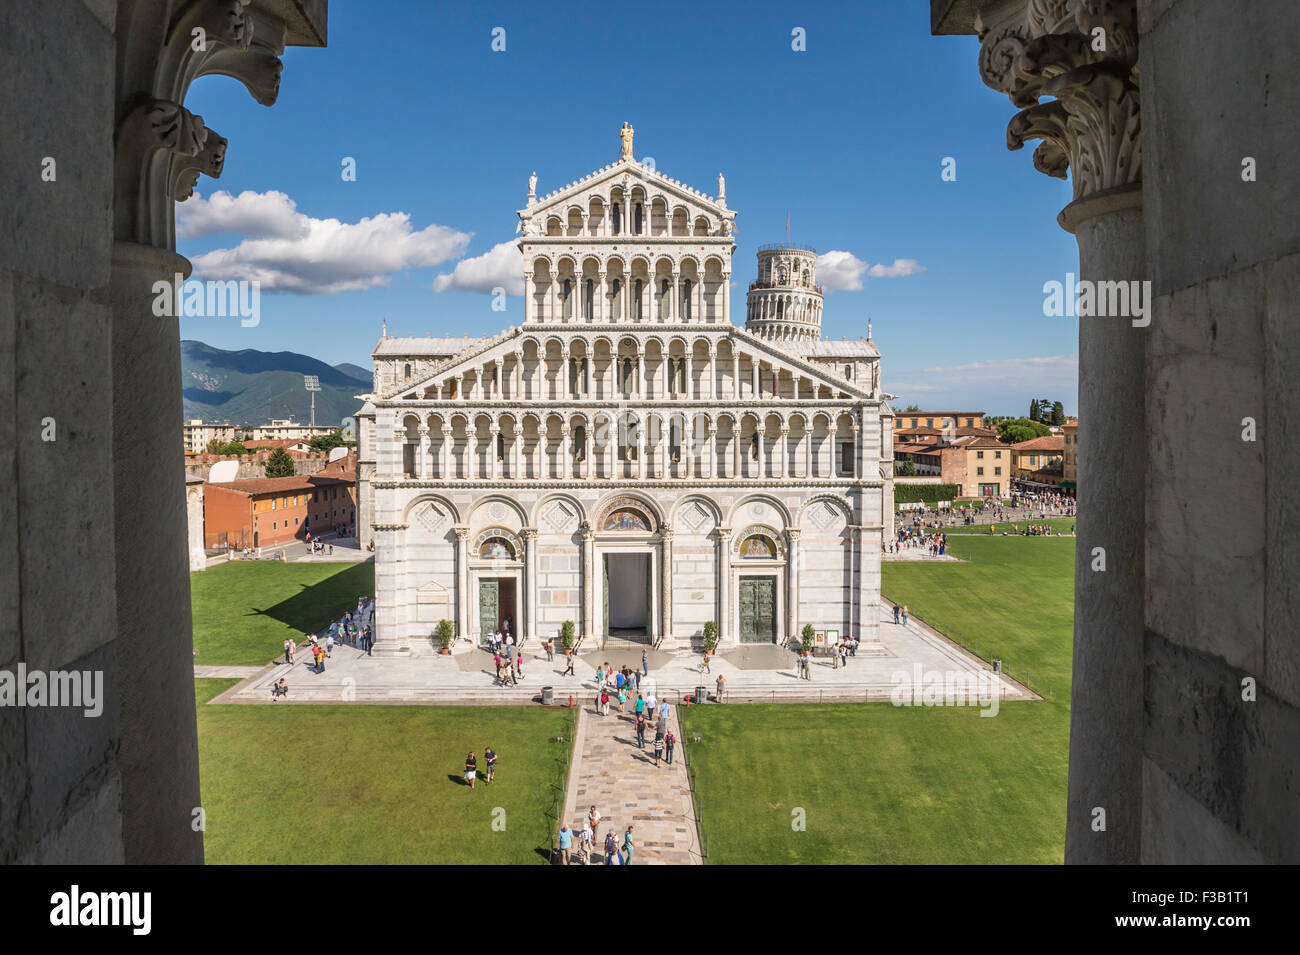 Fassade der Pisa Kathedrale aus dem Baptisterium, Duomo, Piazza dei  Miracoli, Pisa, Toskana, Italien Stockfotografie - Alamy